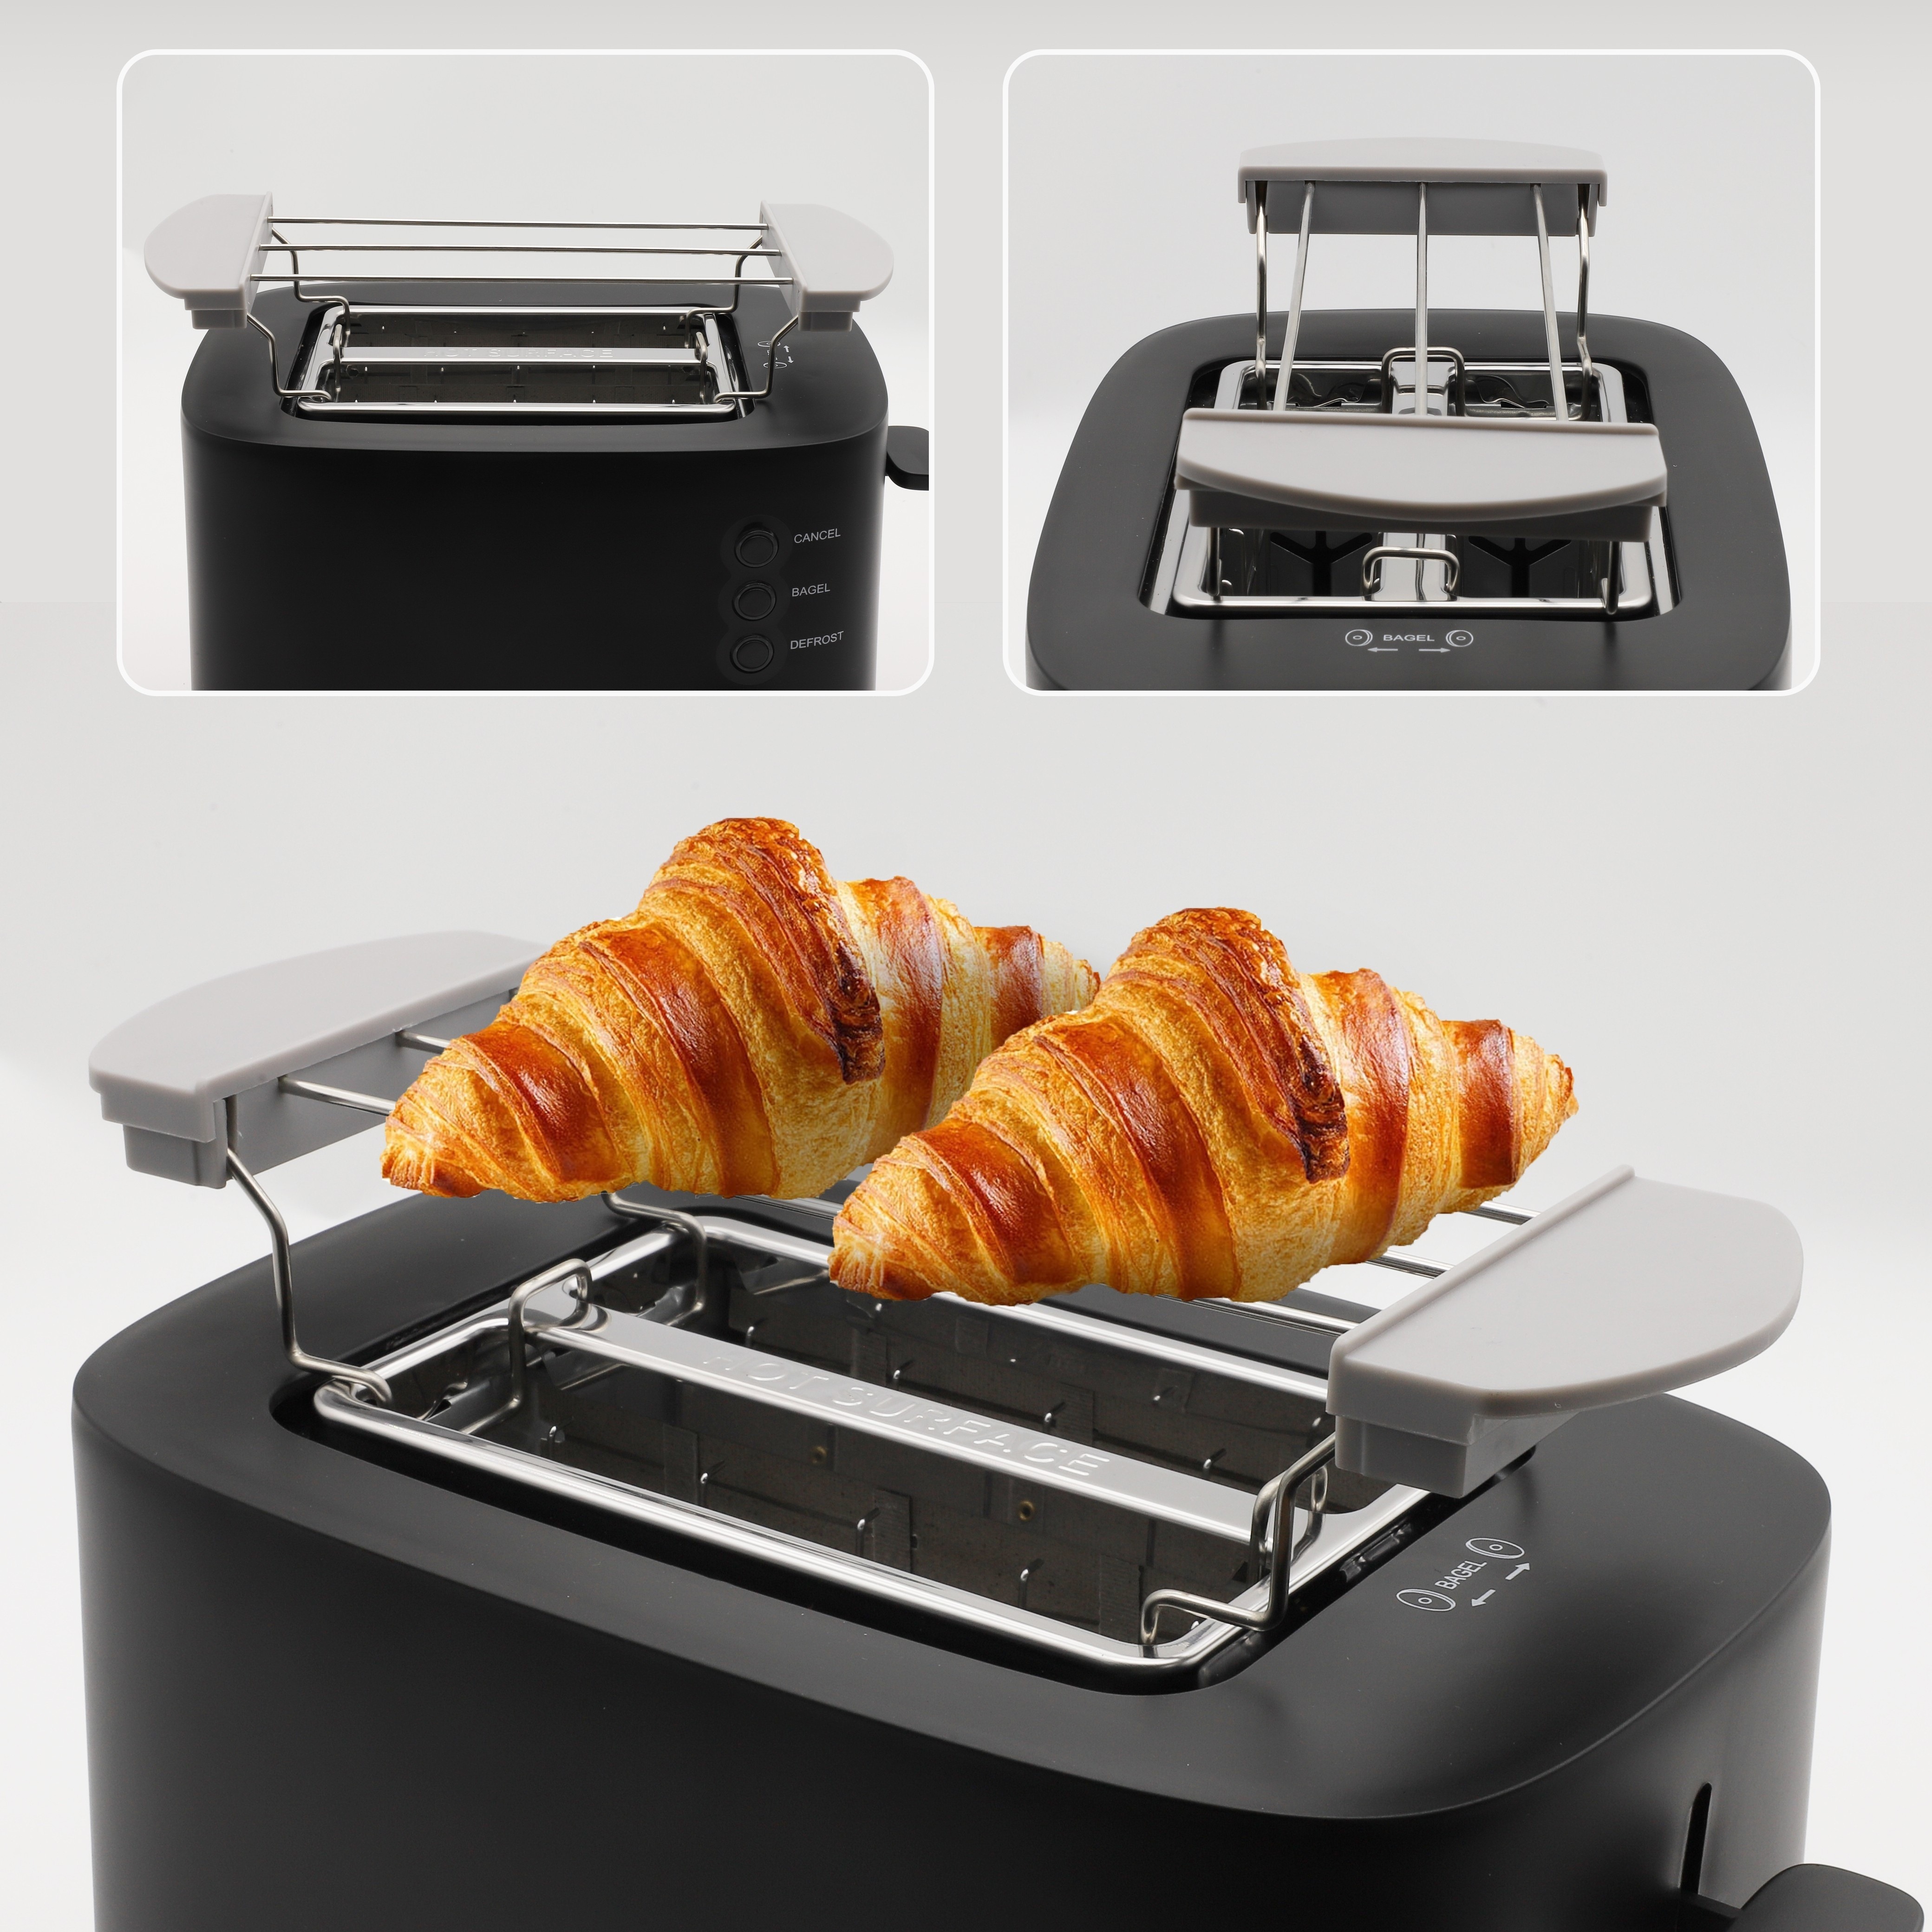 Stainless Steel Sandwich Holder Cage Warming Rack Attachment Toaster  Accessory Kitchen Utensils Anti-scalding Handles